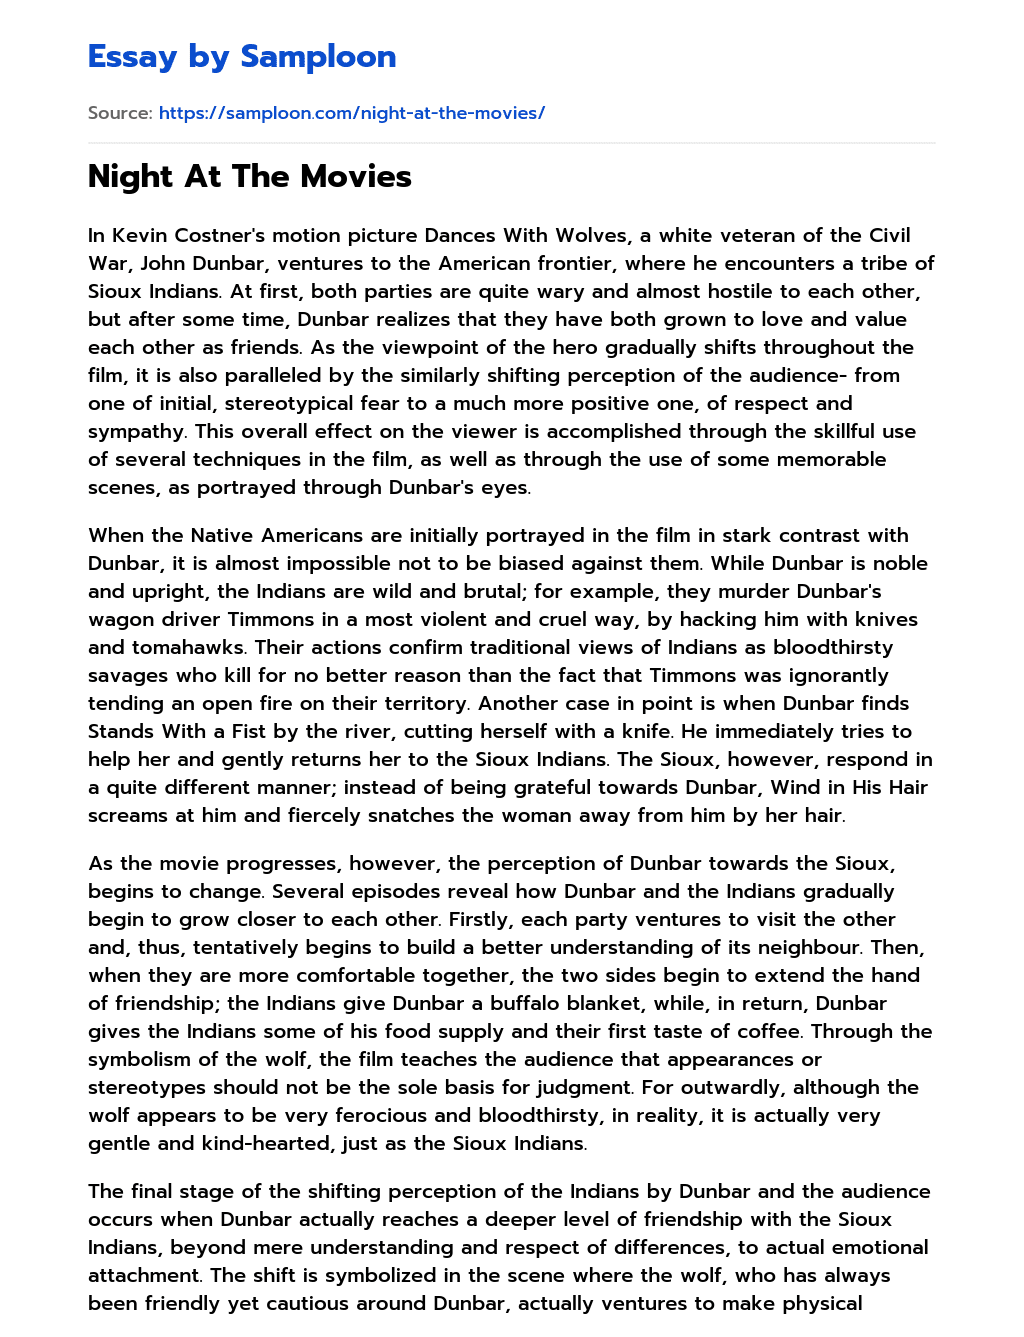 Night At The Movies essay